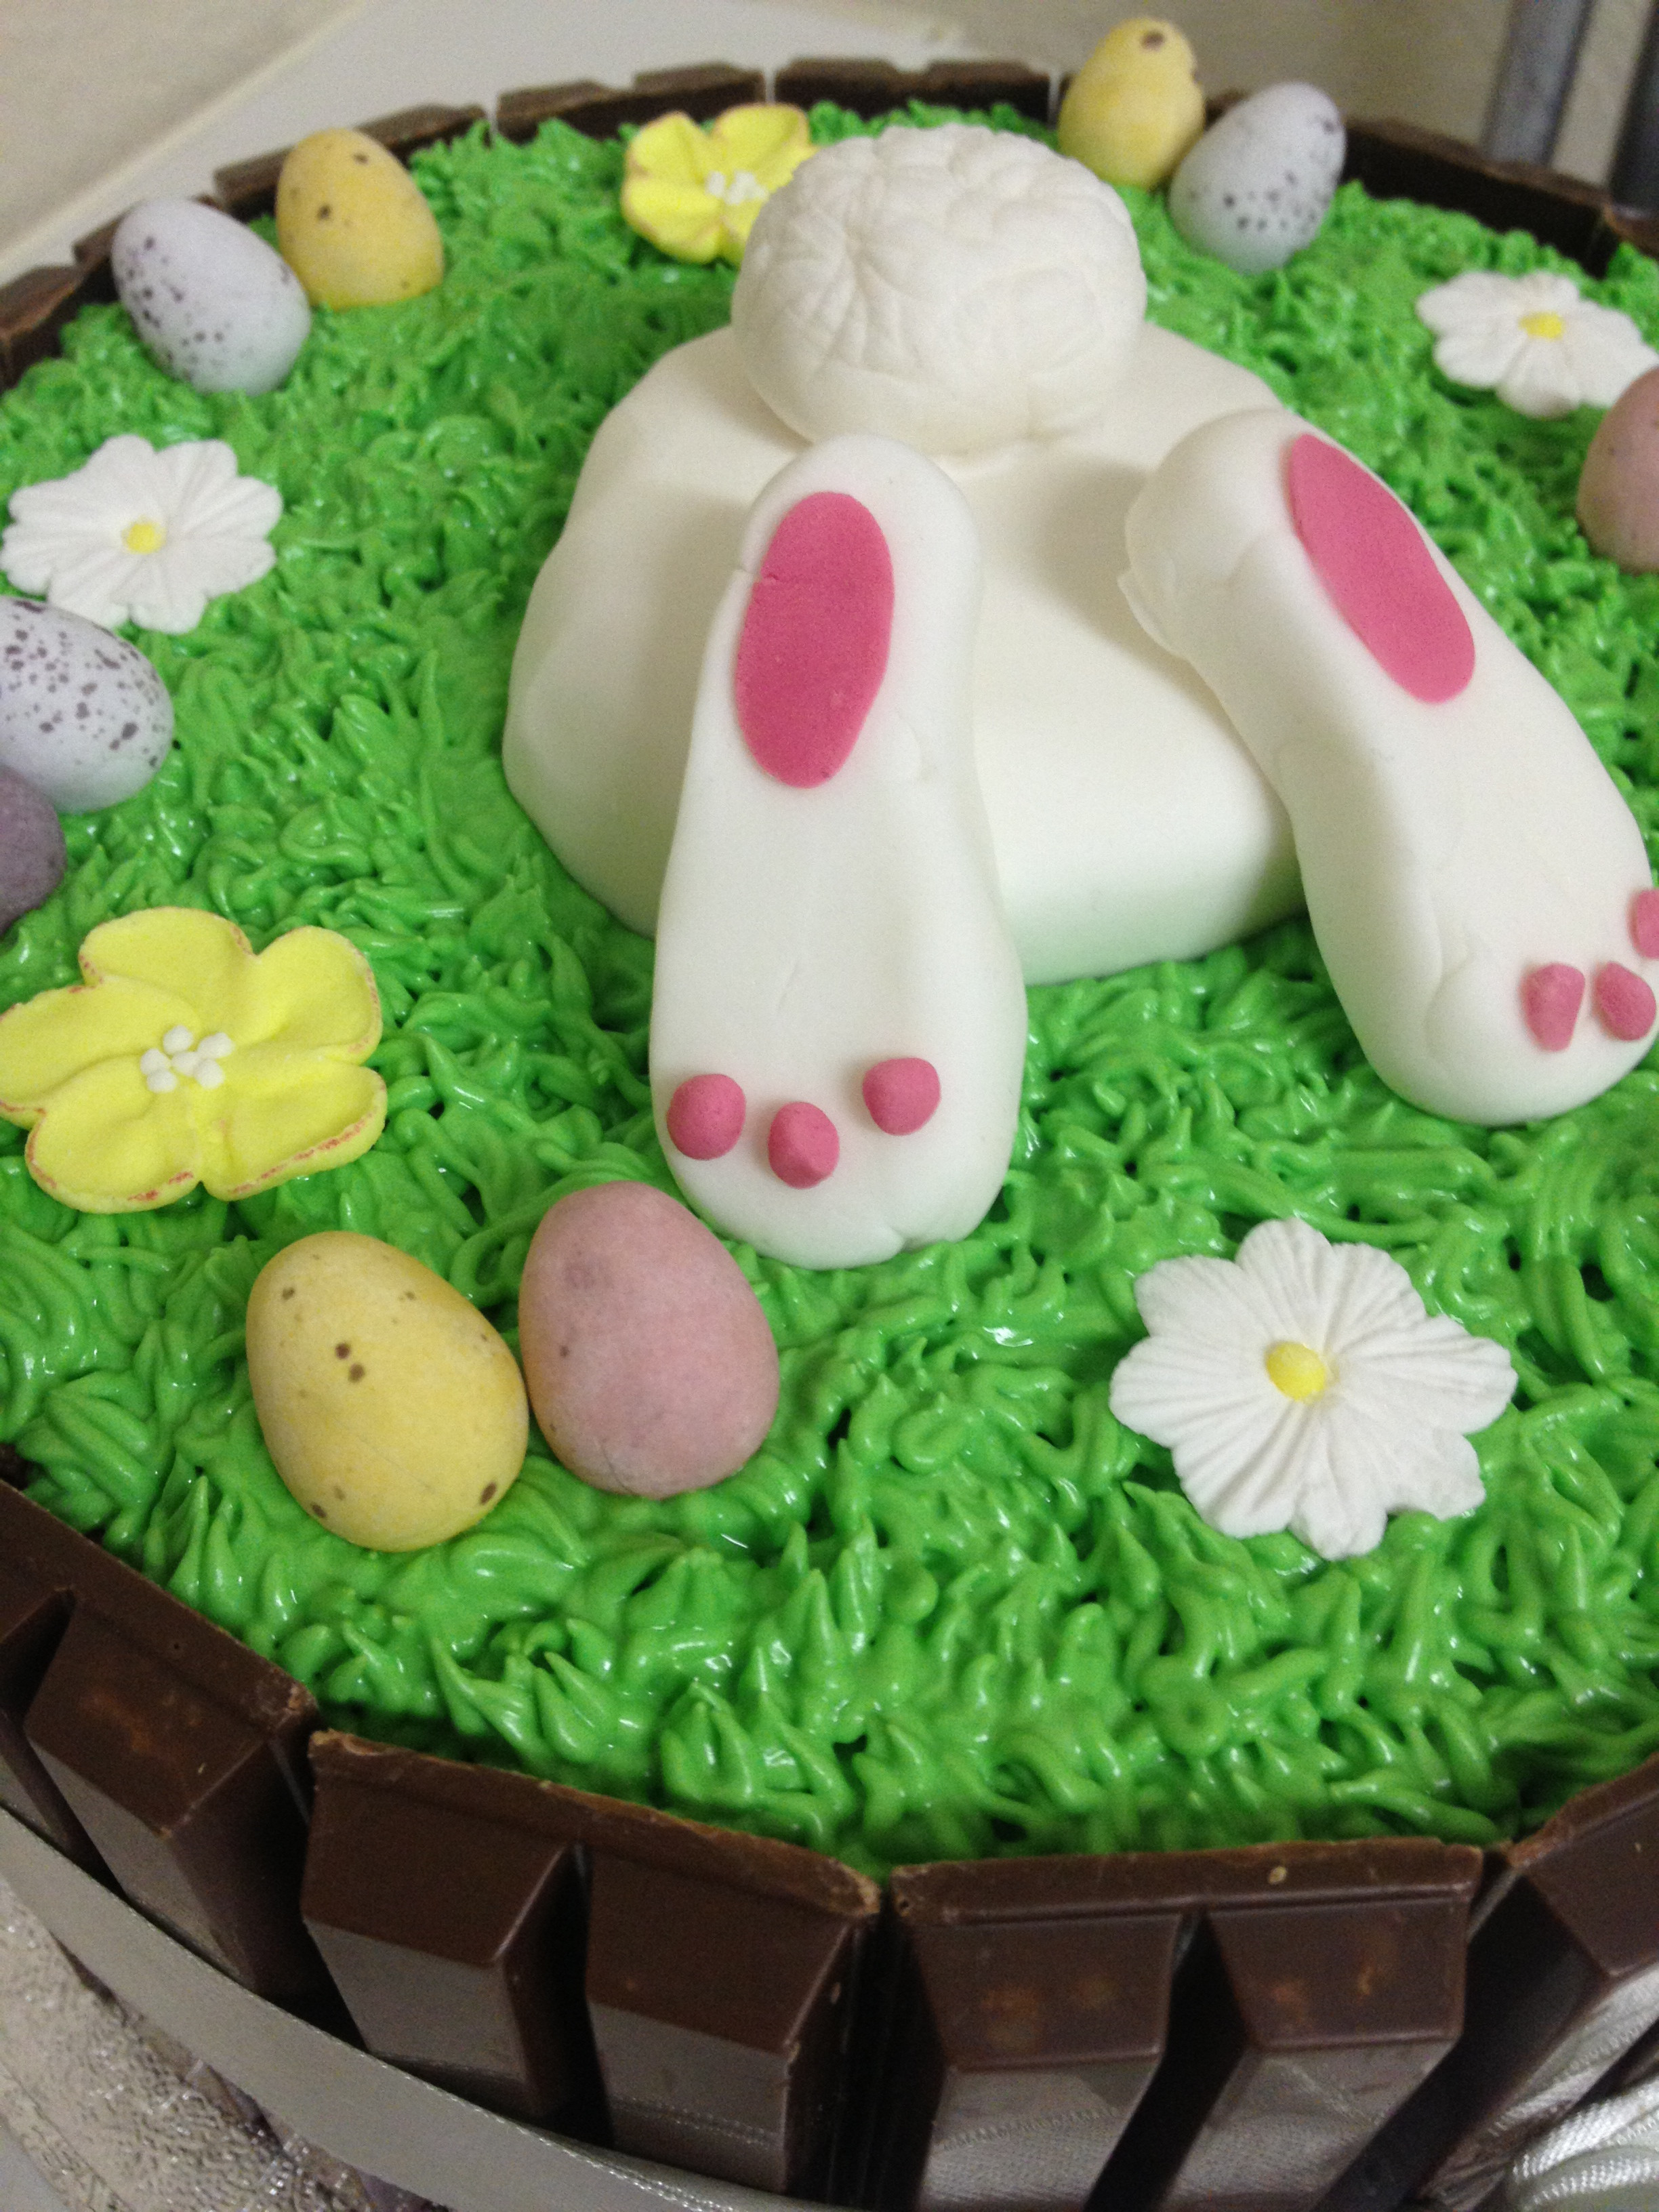 Easter Cake Recipe the 20 Best Ideas for Easter Cake Recipe – Little Muffin Blog